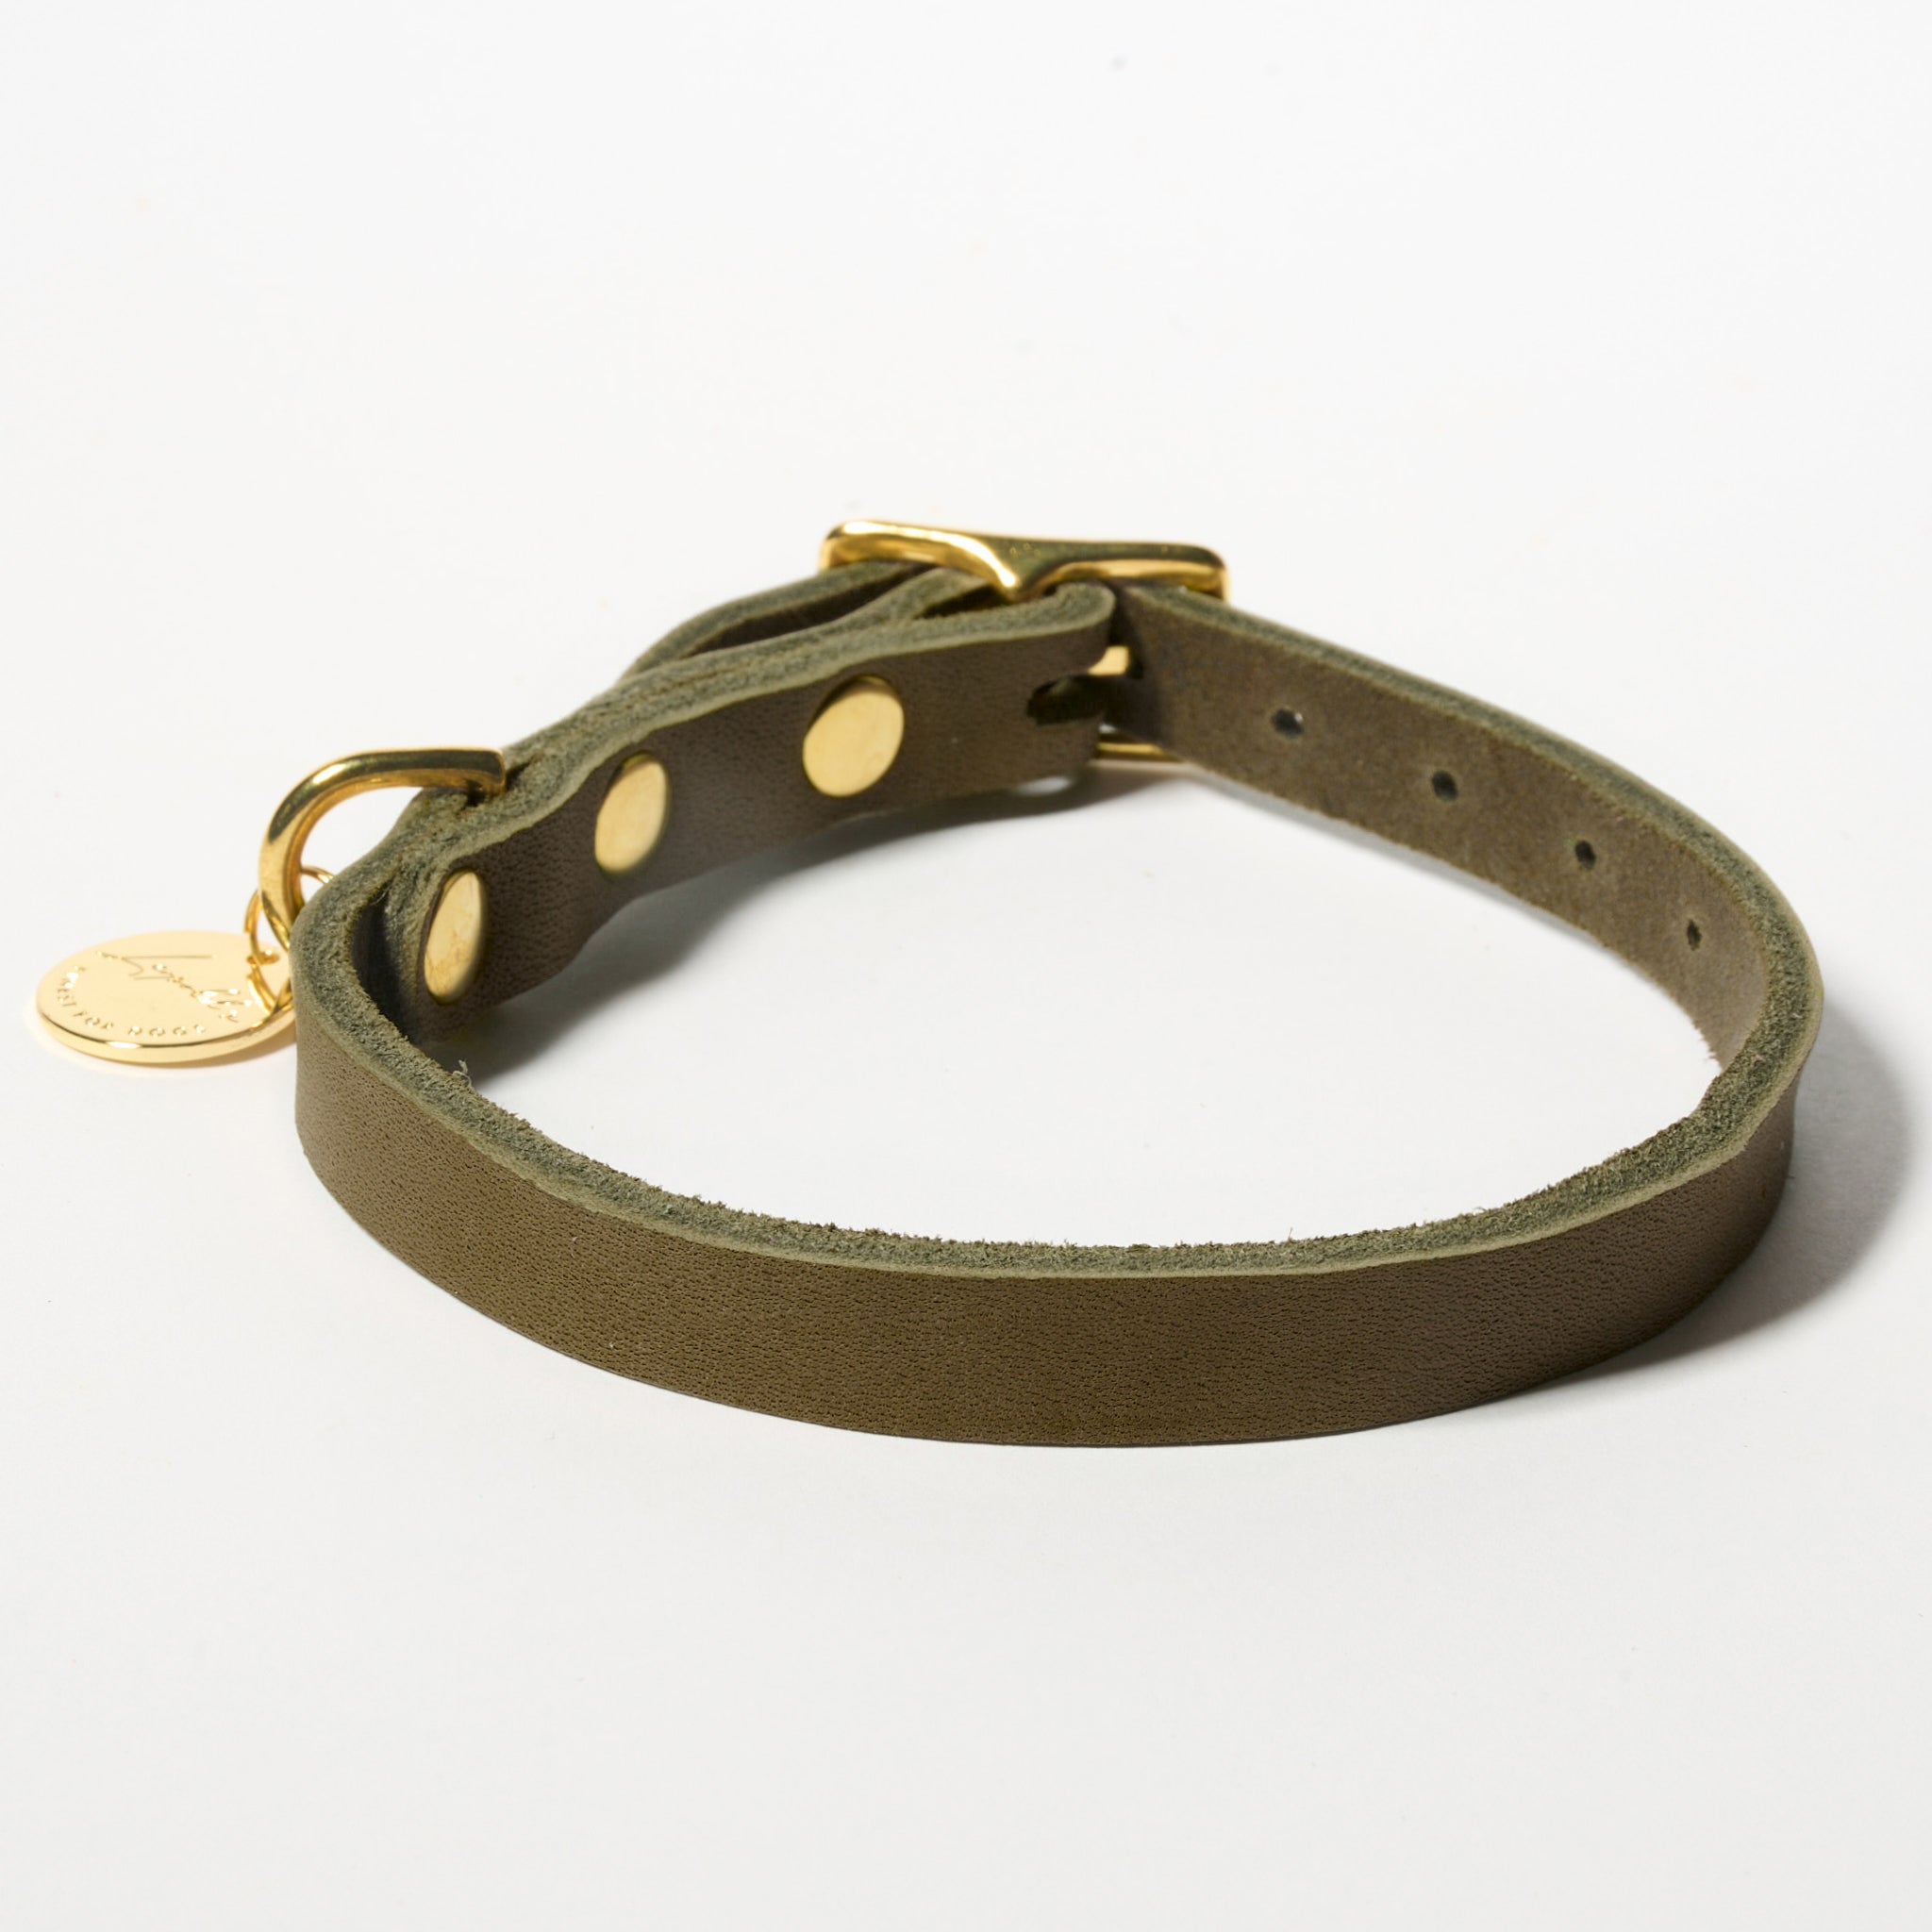 Hundehalsband Fettleder Oliv-Gold / 22-28cm - von Leopold's kaufen bei [Oliv-Gold]